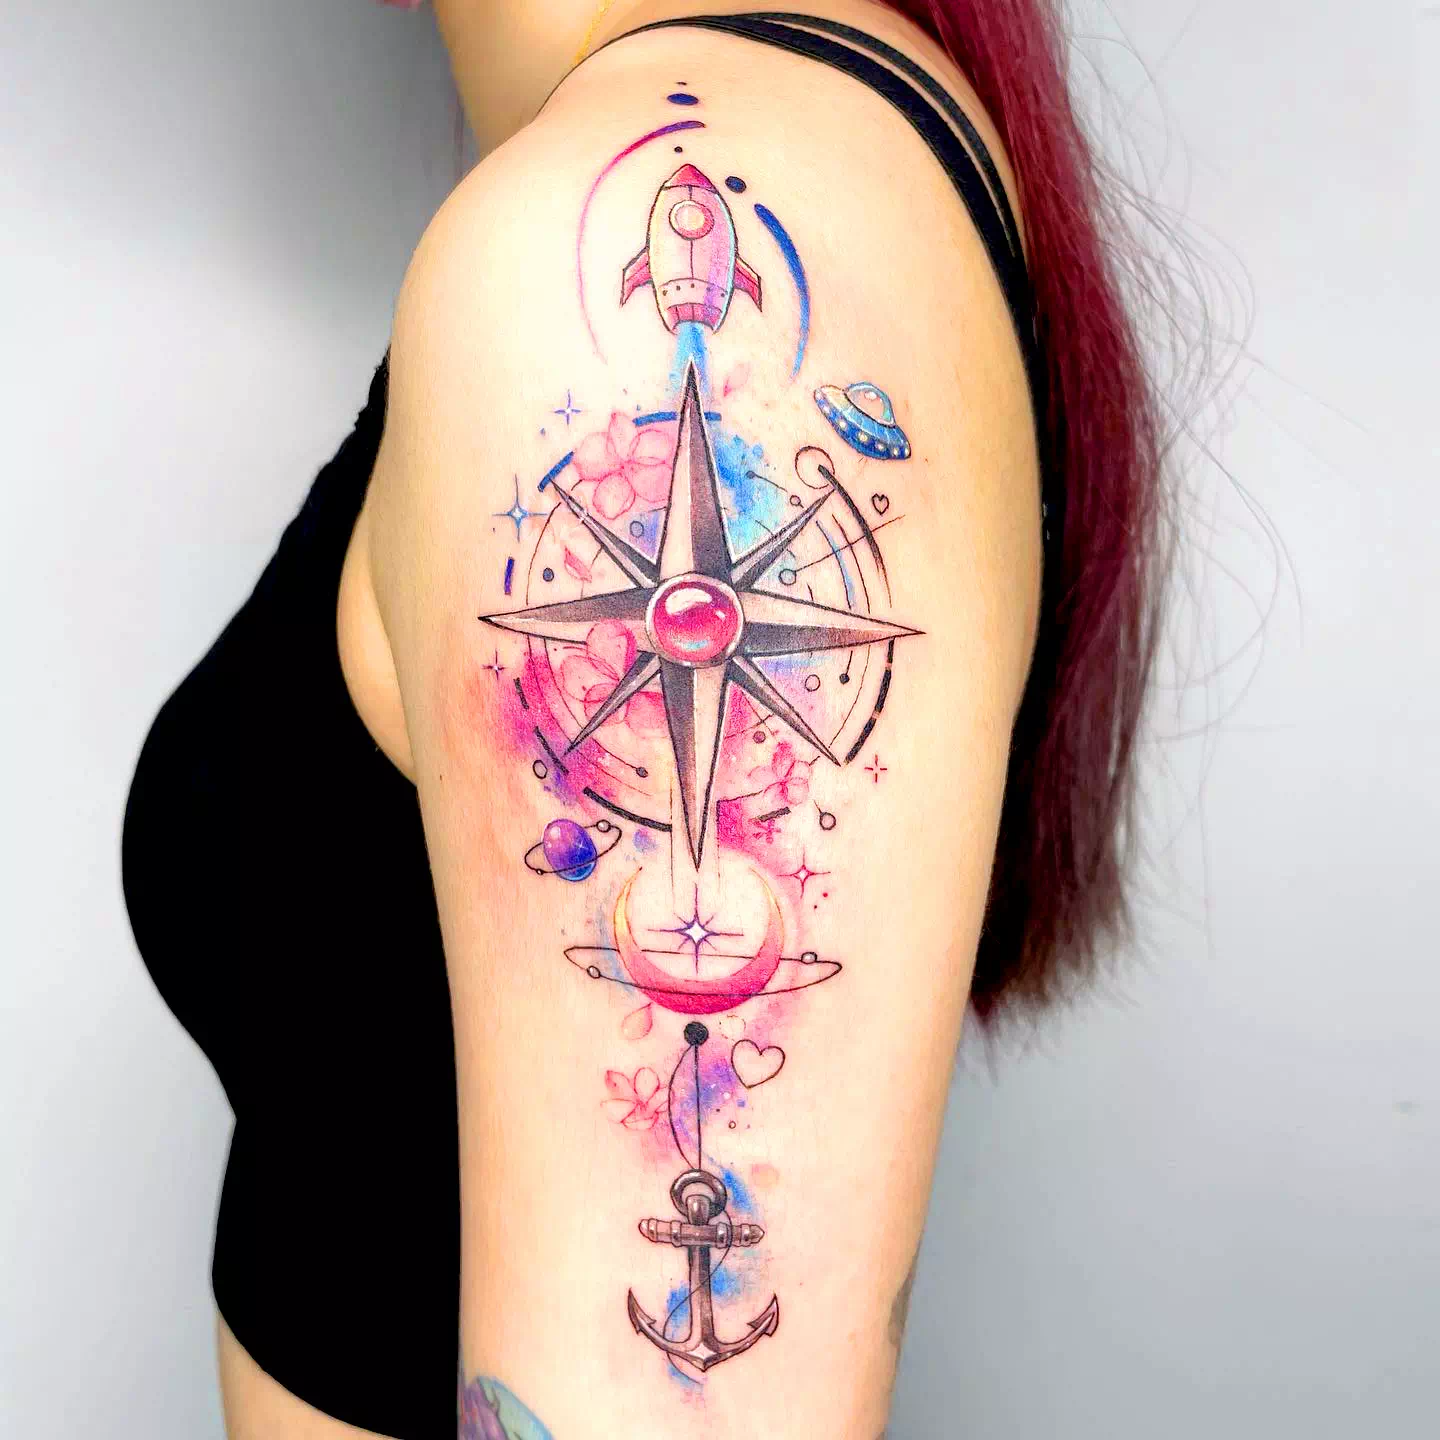 Forearm Blue Compass Arrow Tattoo